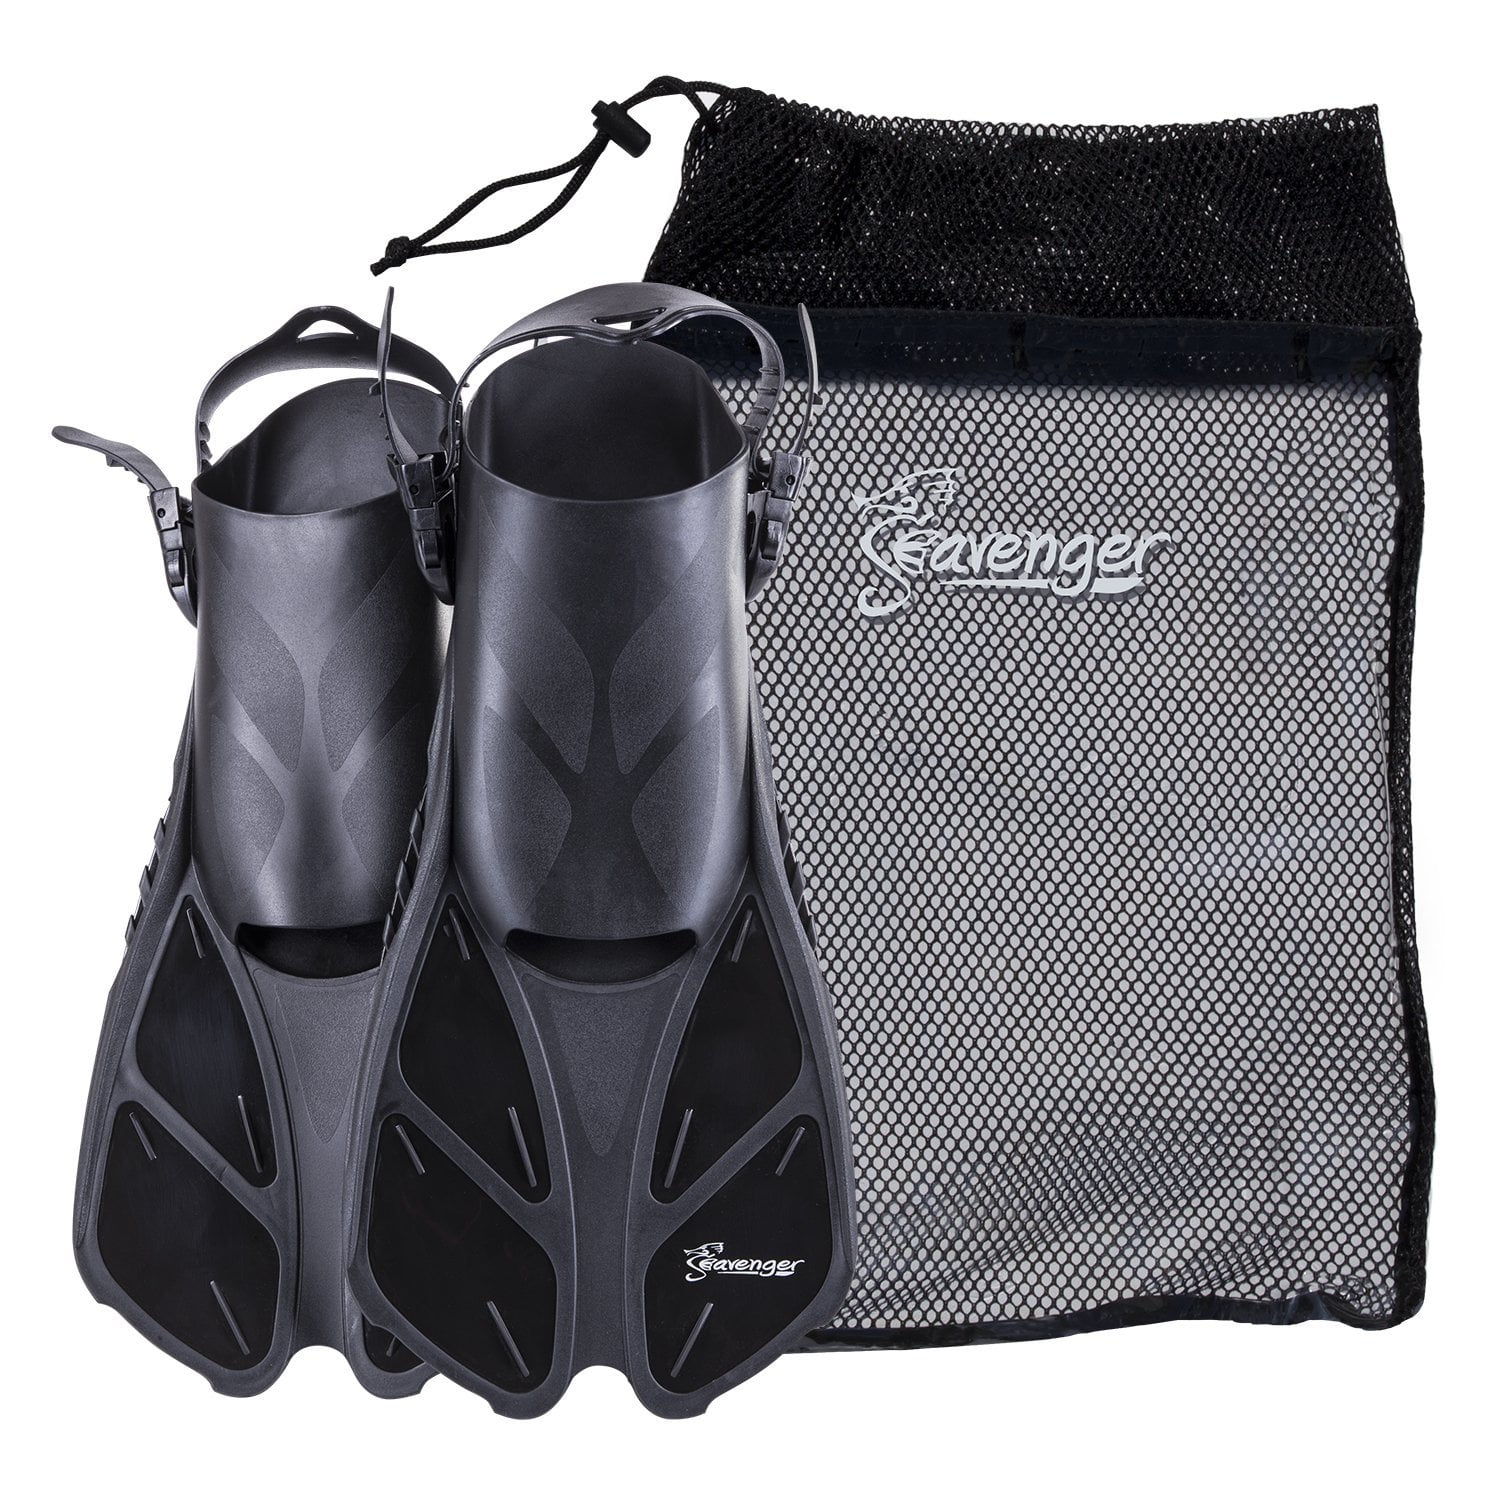 Used Seavenger Mask and Snorkel Swimming Training Set Combo 